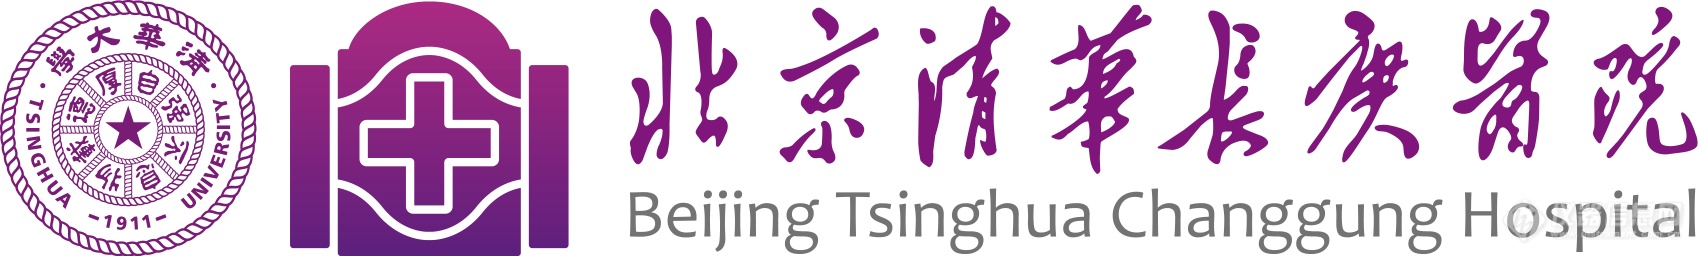 清华长庚医院 logo.png